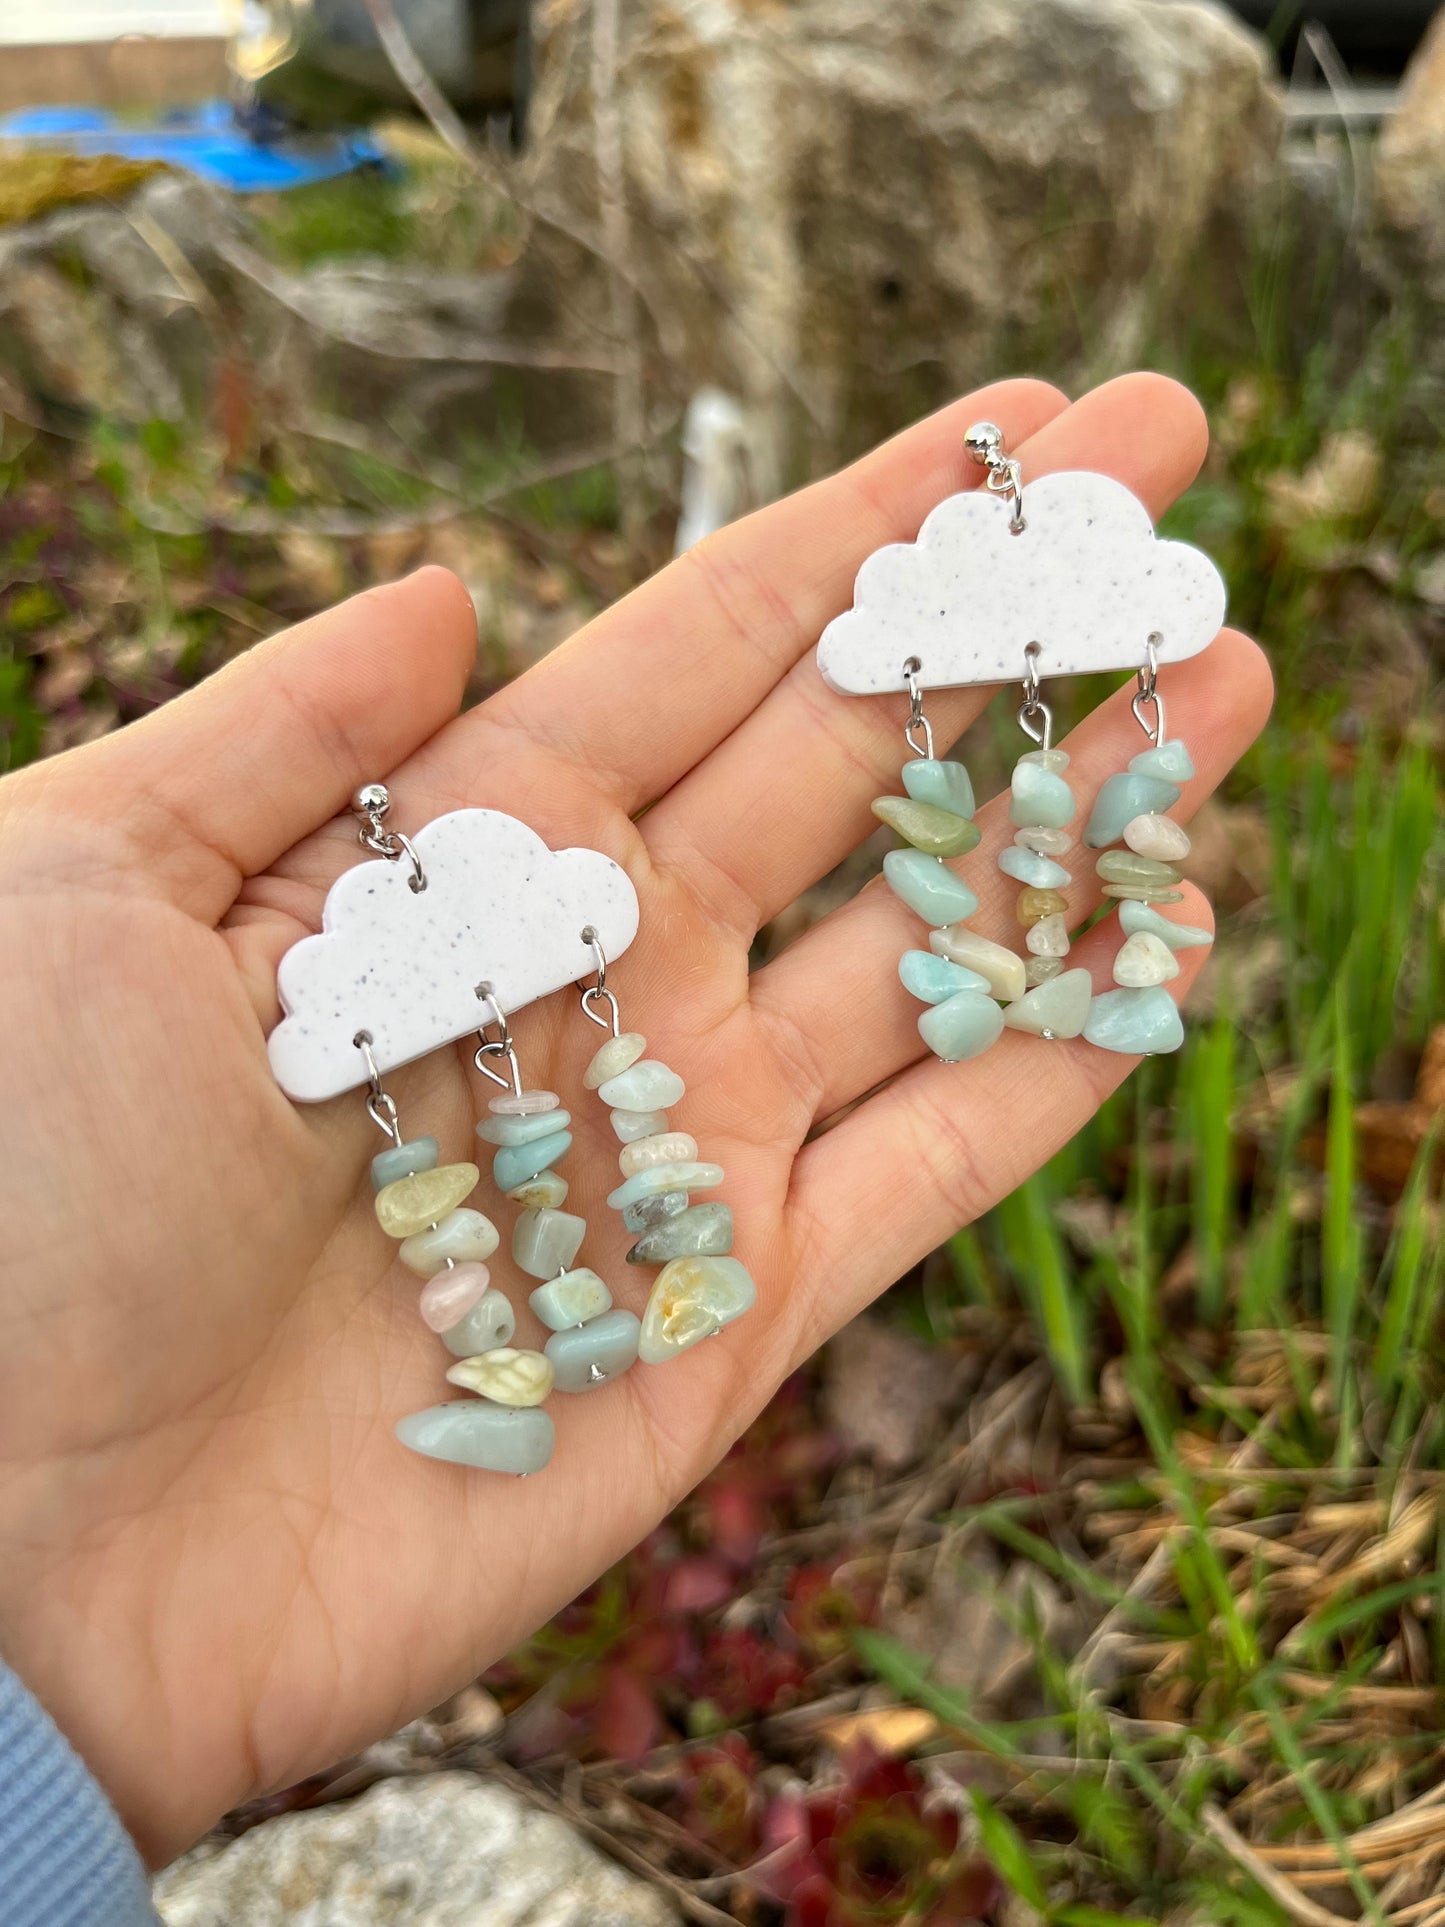 Raining crystals